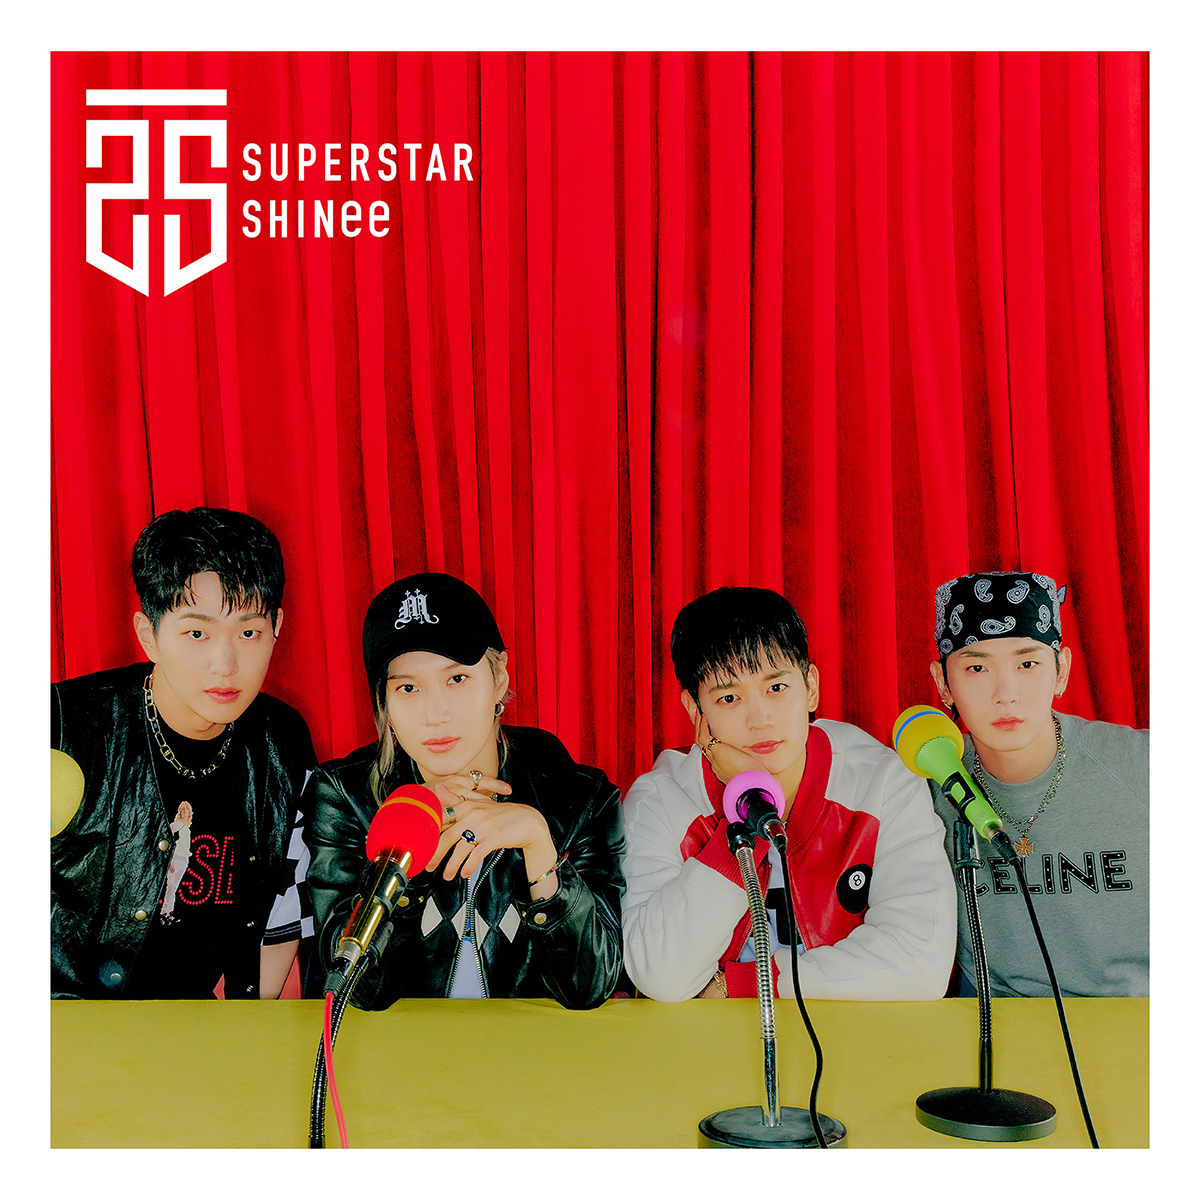 SHINee日本迷你专辑《SUPERSTAR》数码封面图.jpg